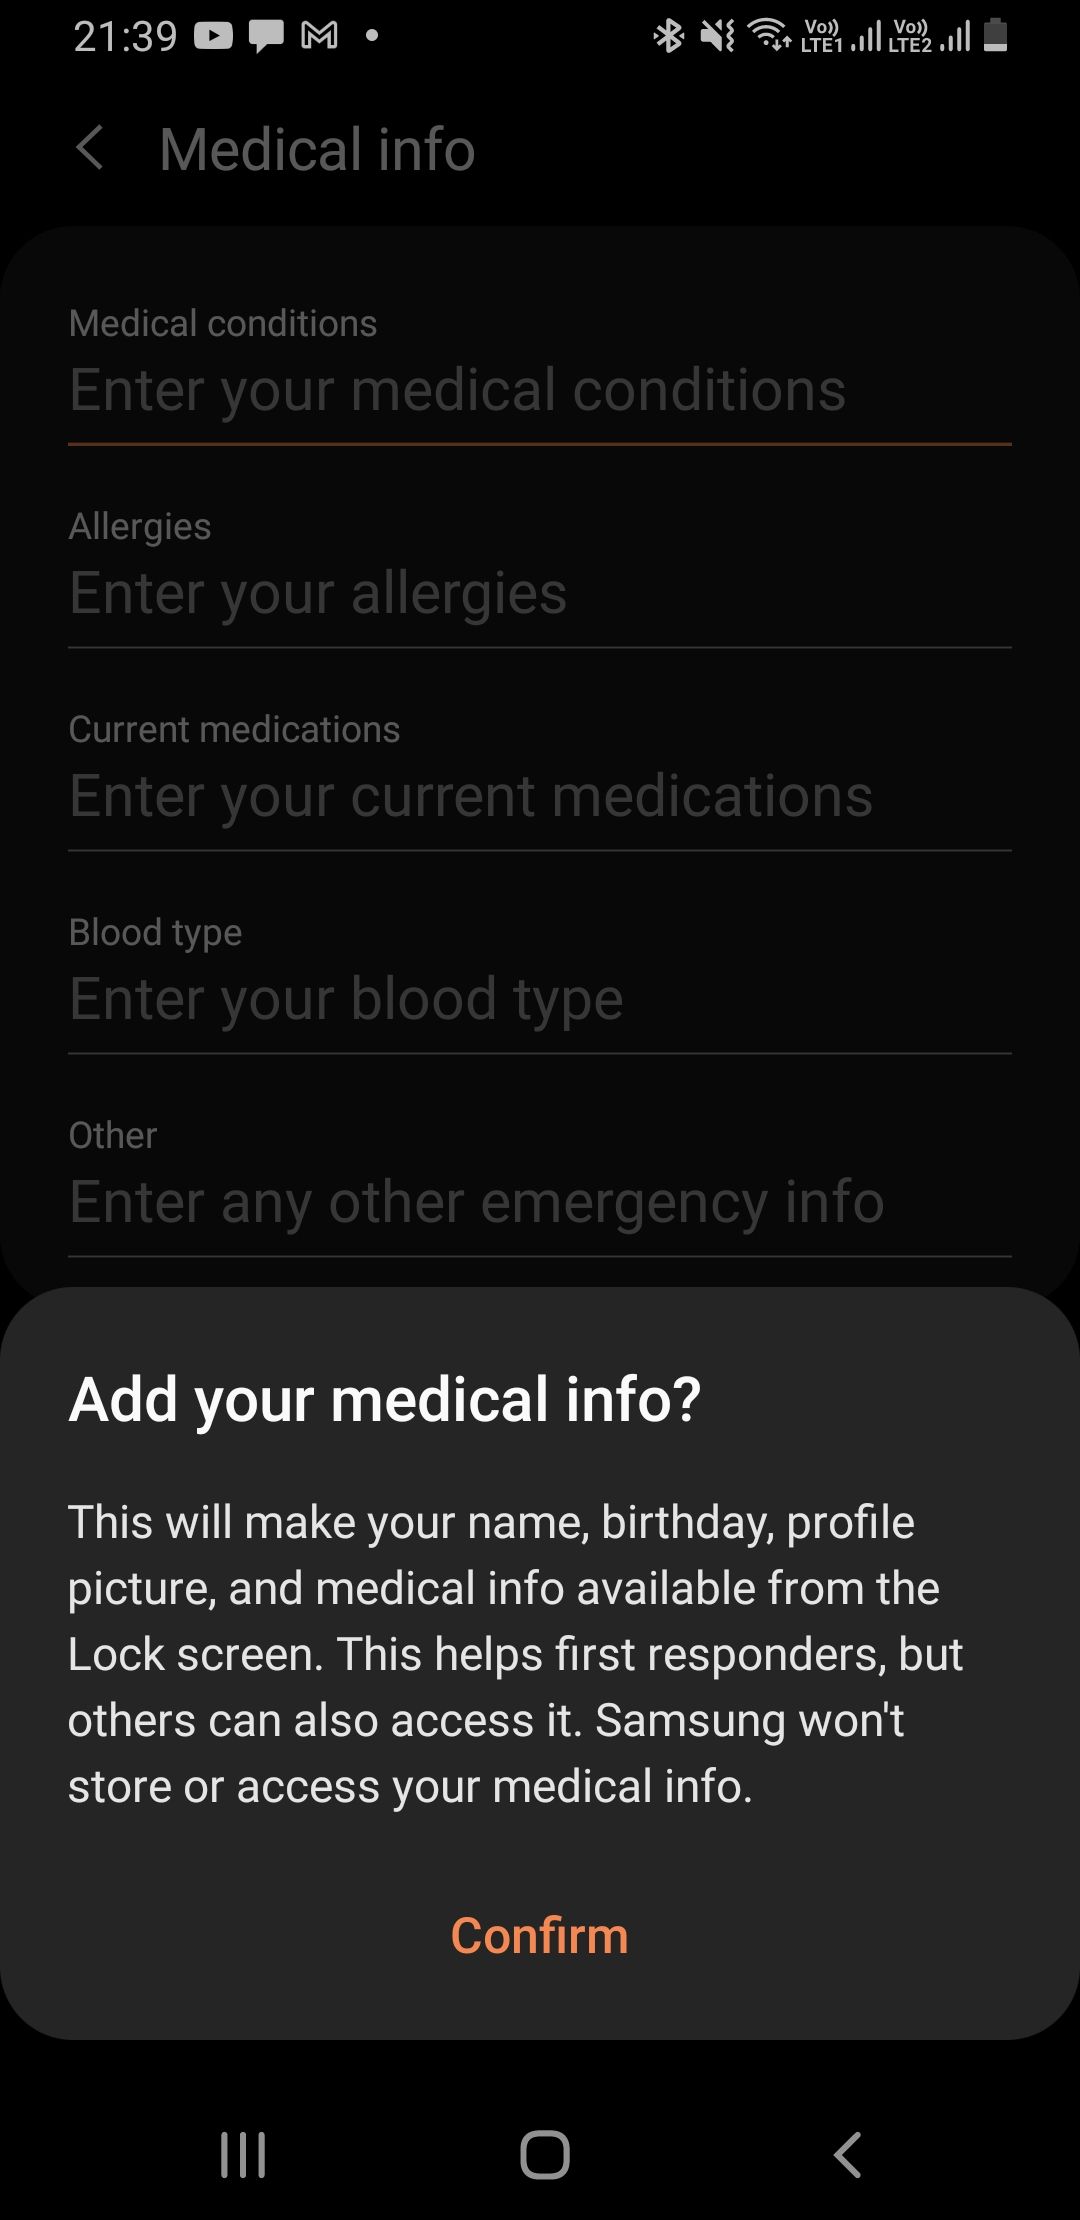 Samsung setting up medical info